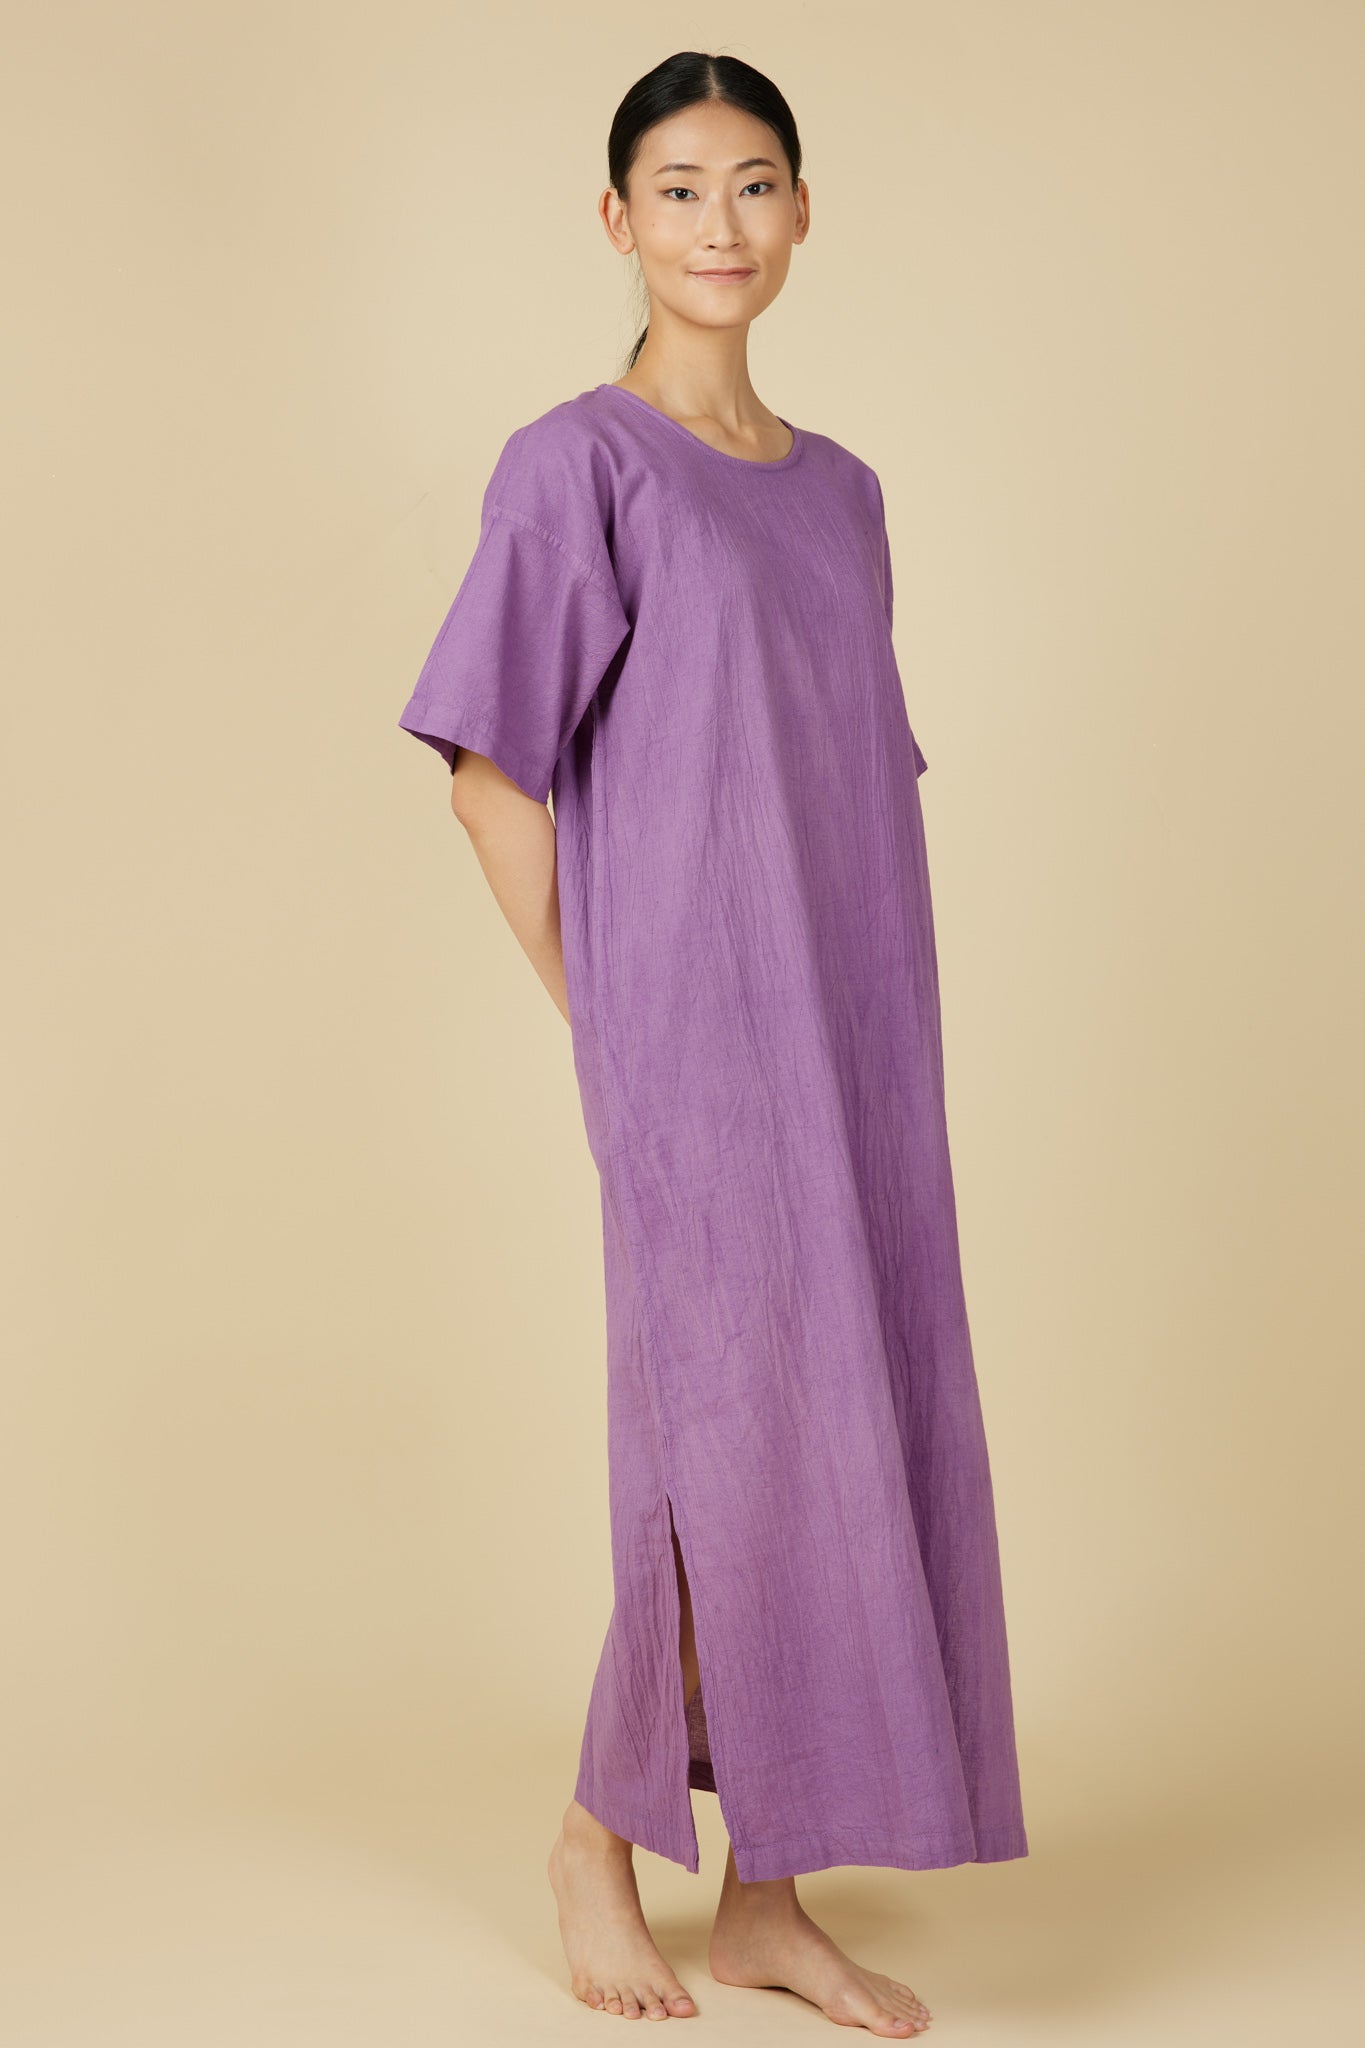 Hand Dyed Short Sleeve Dress in Liliac